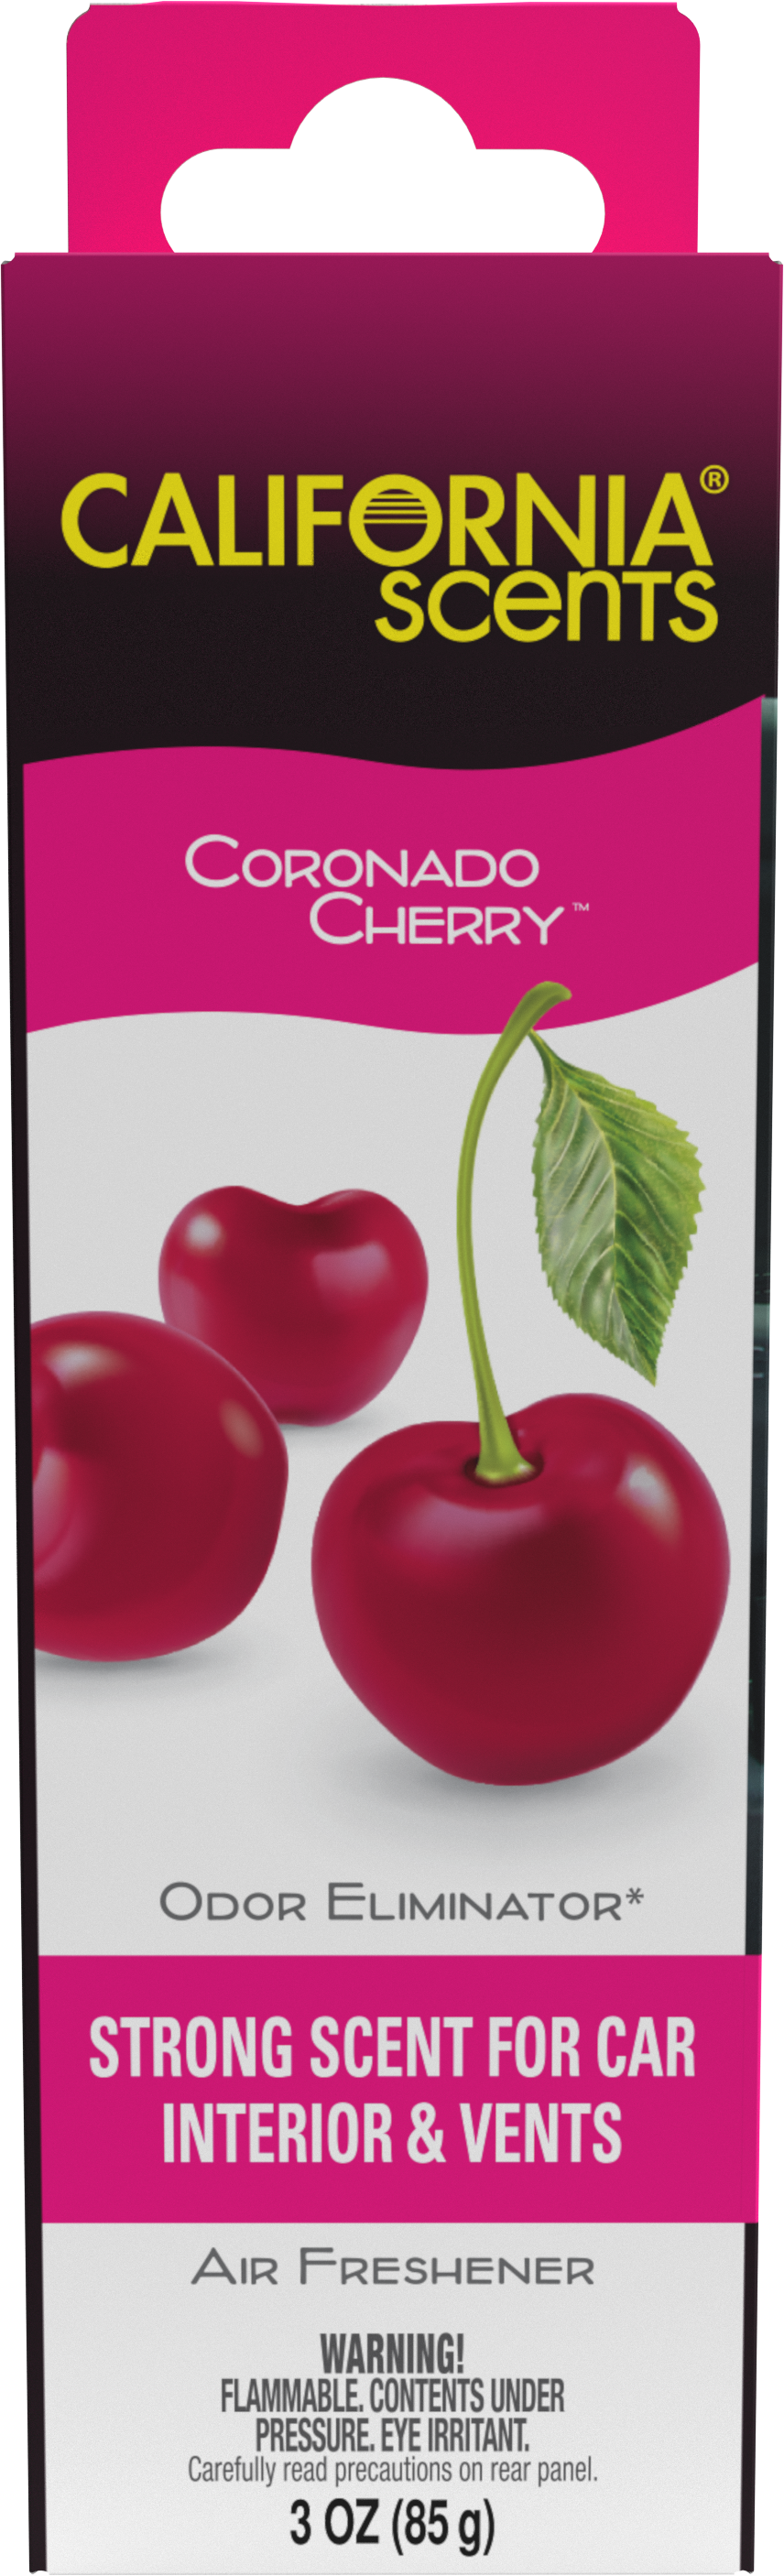 California Scents 3-oz Coronado Cherry Dispenser Air Freshener (3